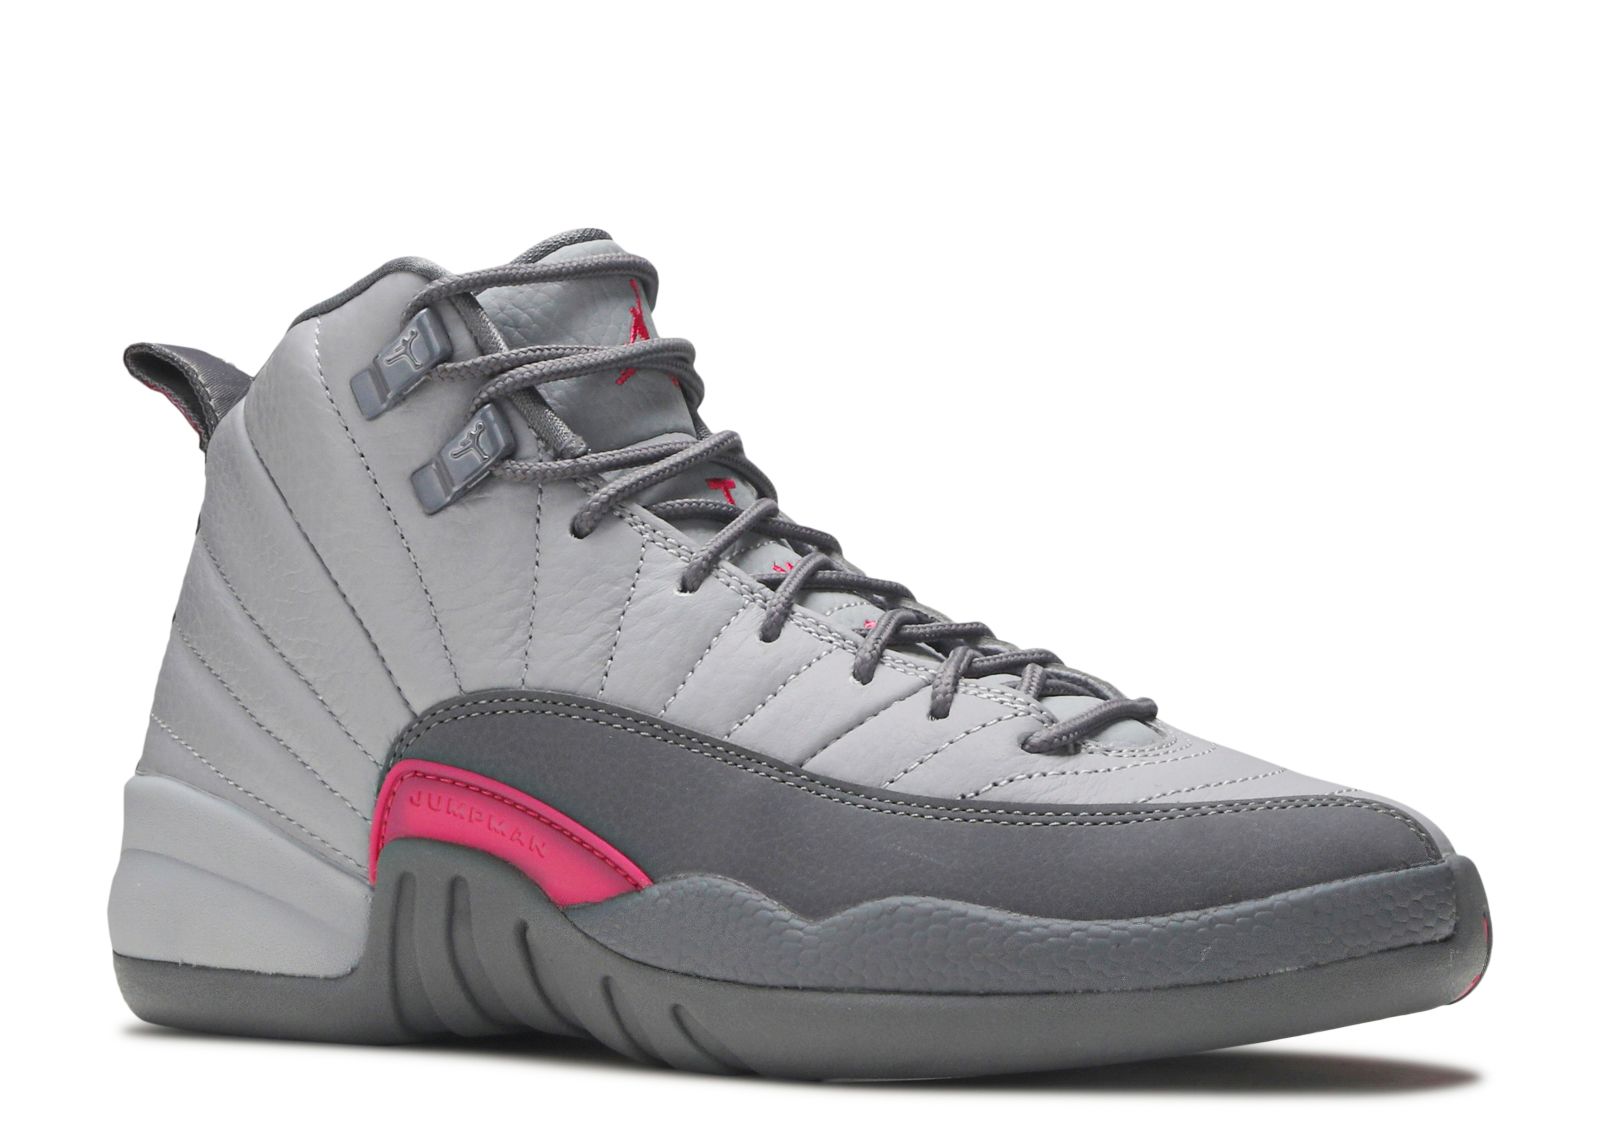 grey and pink jordans 12